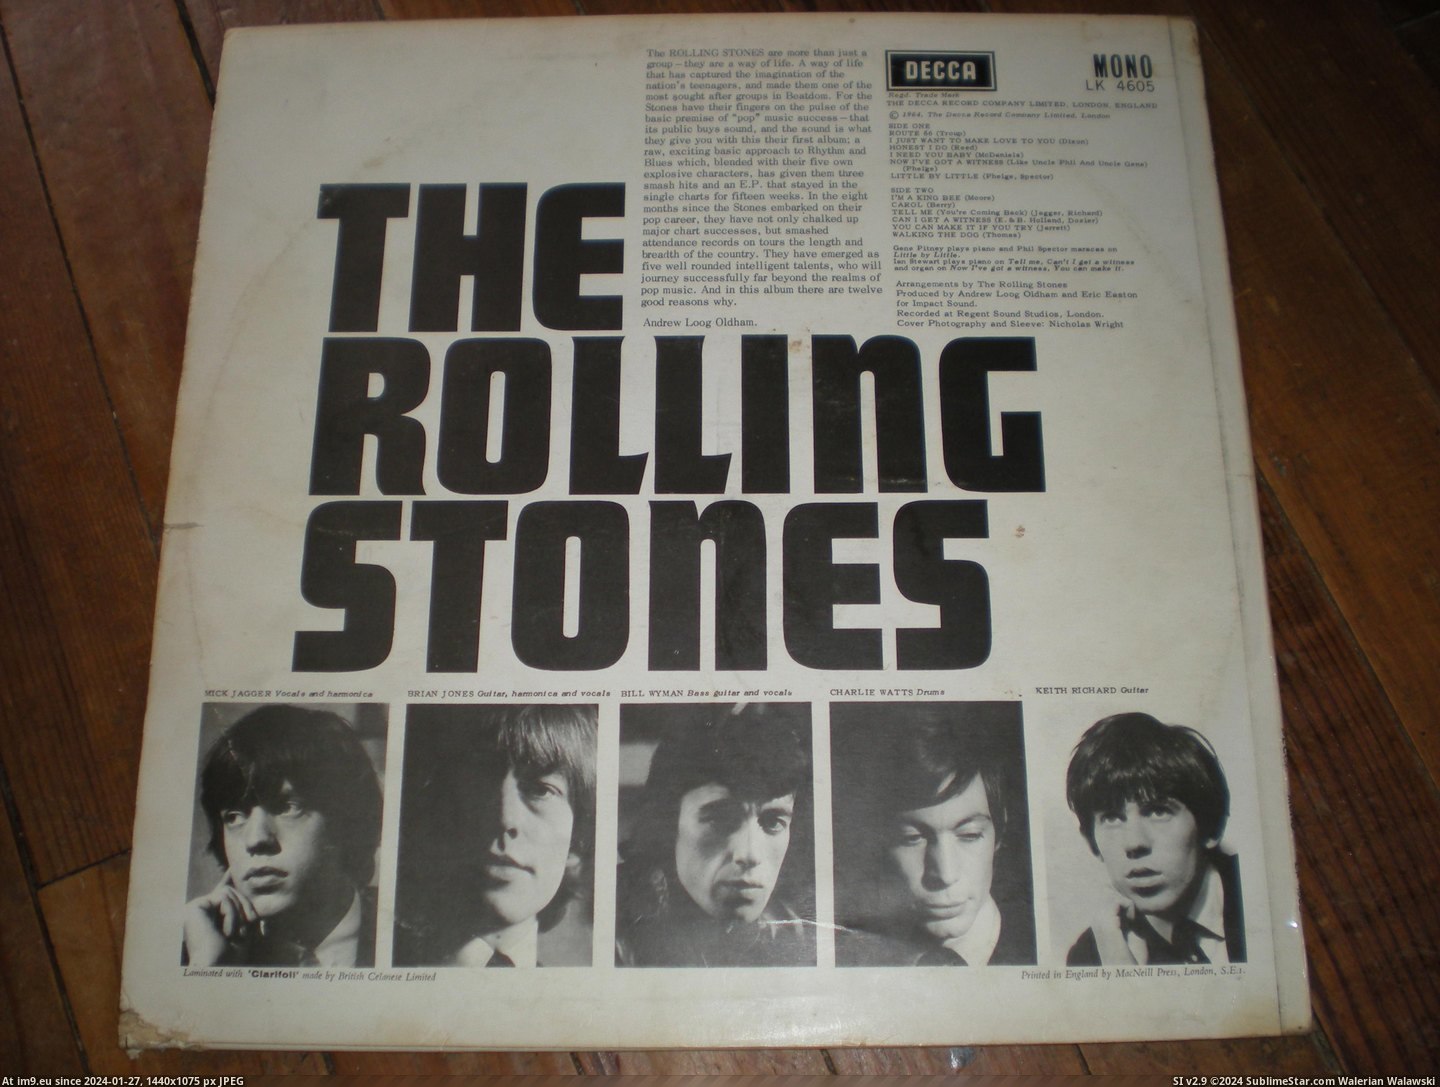 #1st #Boxed #Stones Stones 1st BOXED 6 Pic. (Obraz z album new 1))